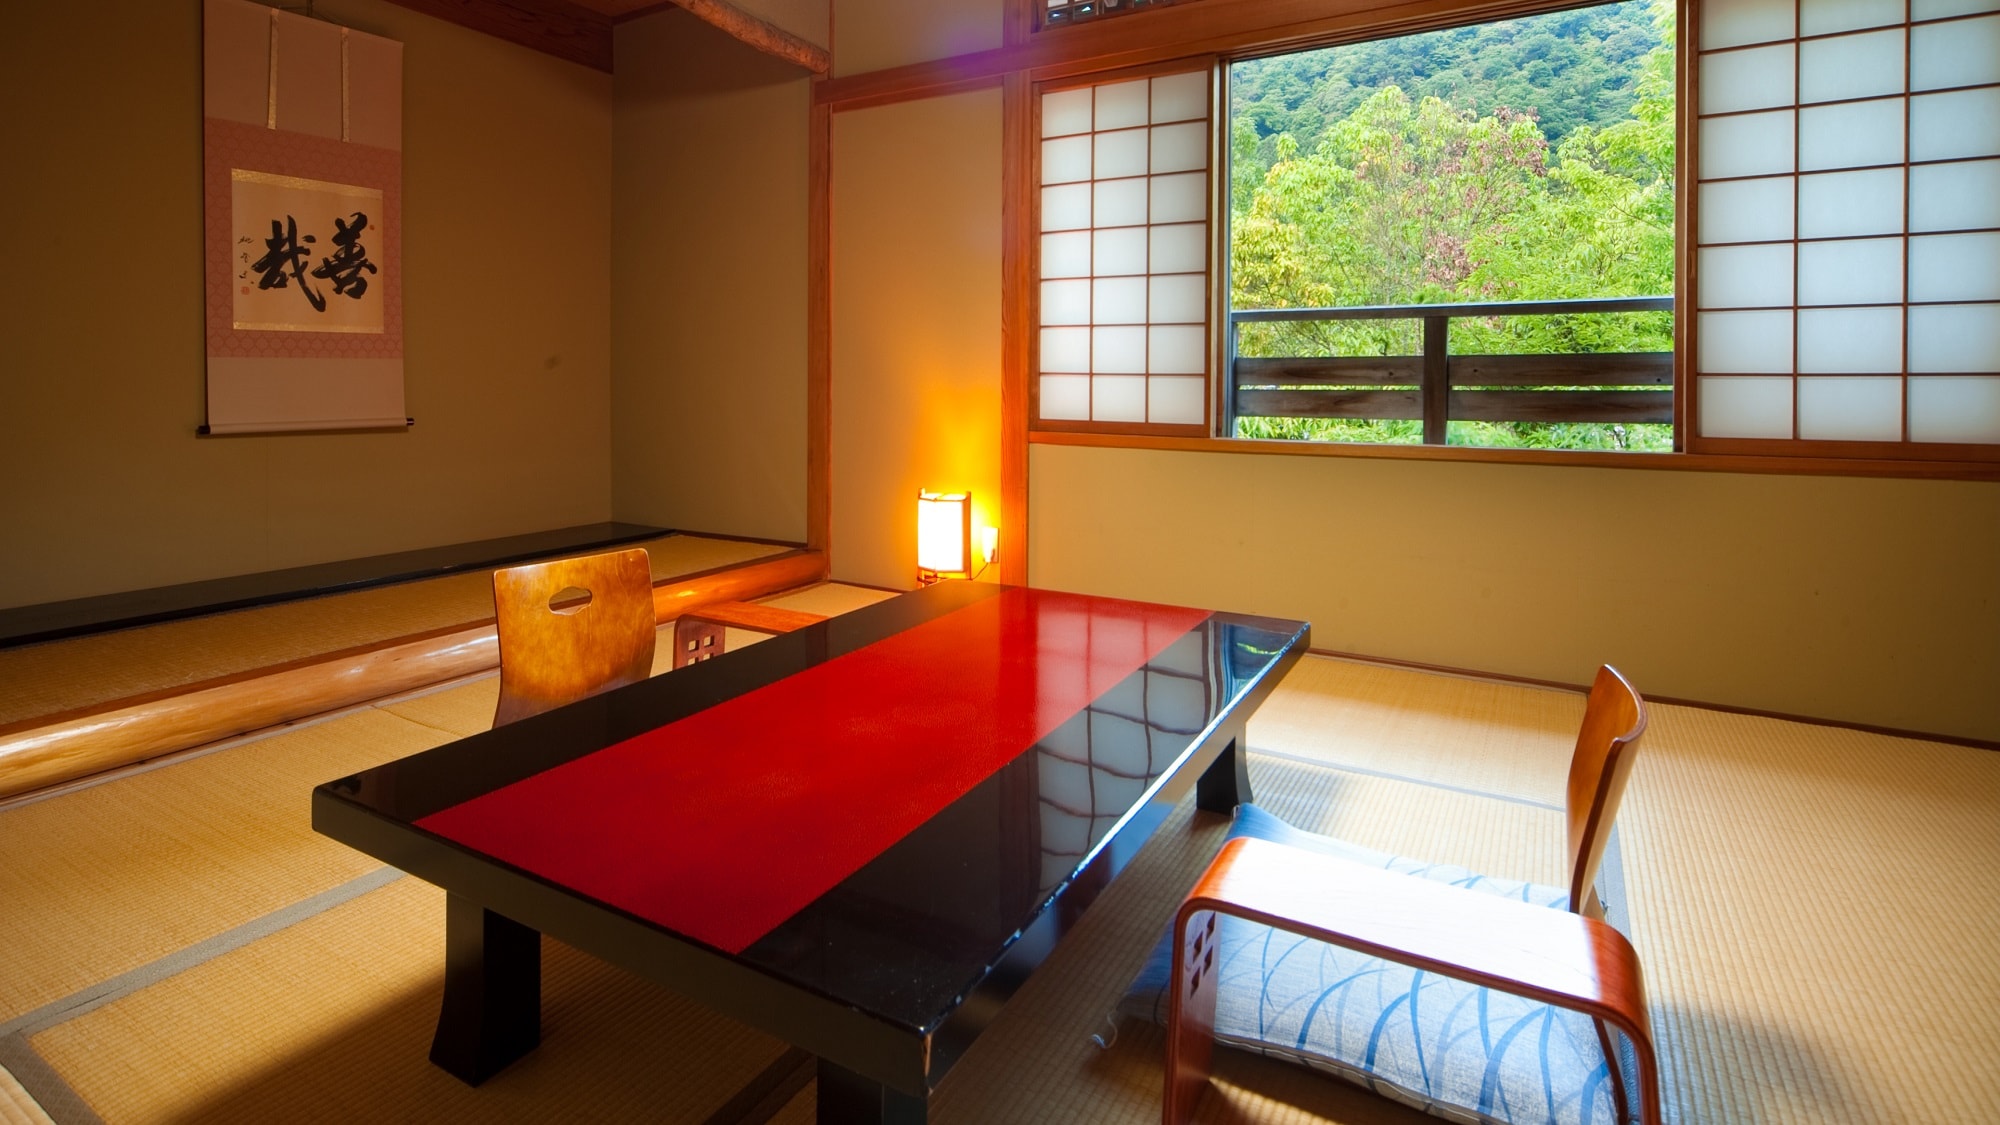 2nd floor Japanese-style room 8 tatami mats + 6 tatami mats (2 rooms)